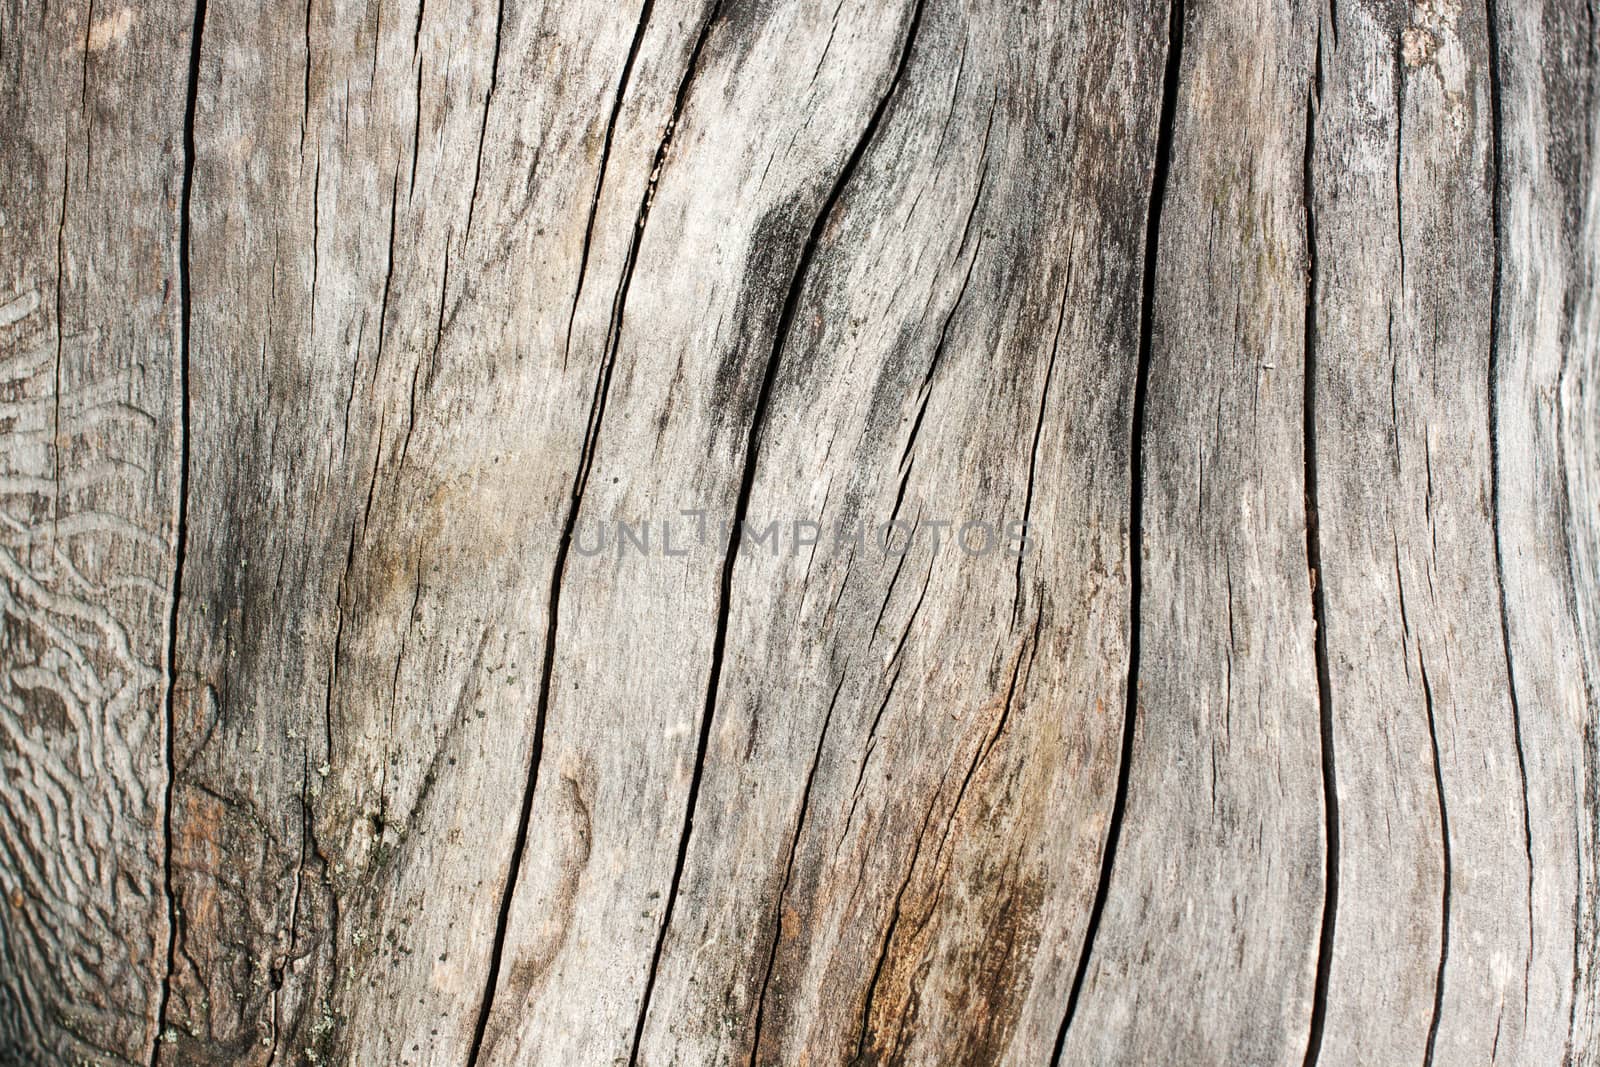 Dirty old wooden background by dazhetak